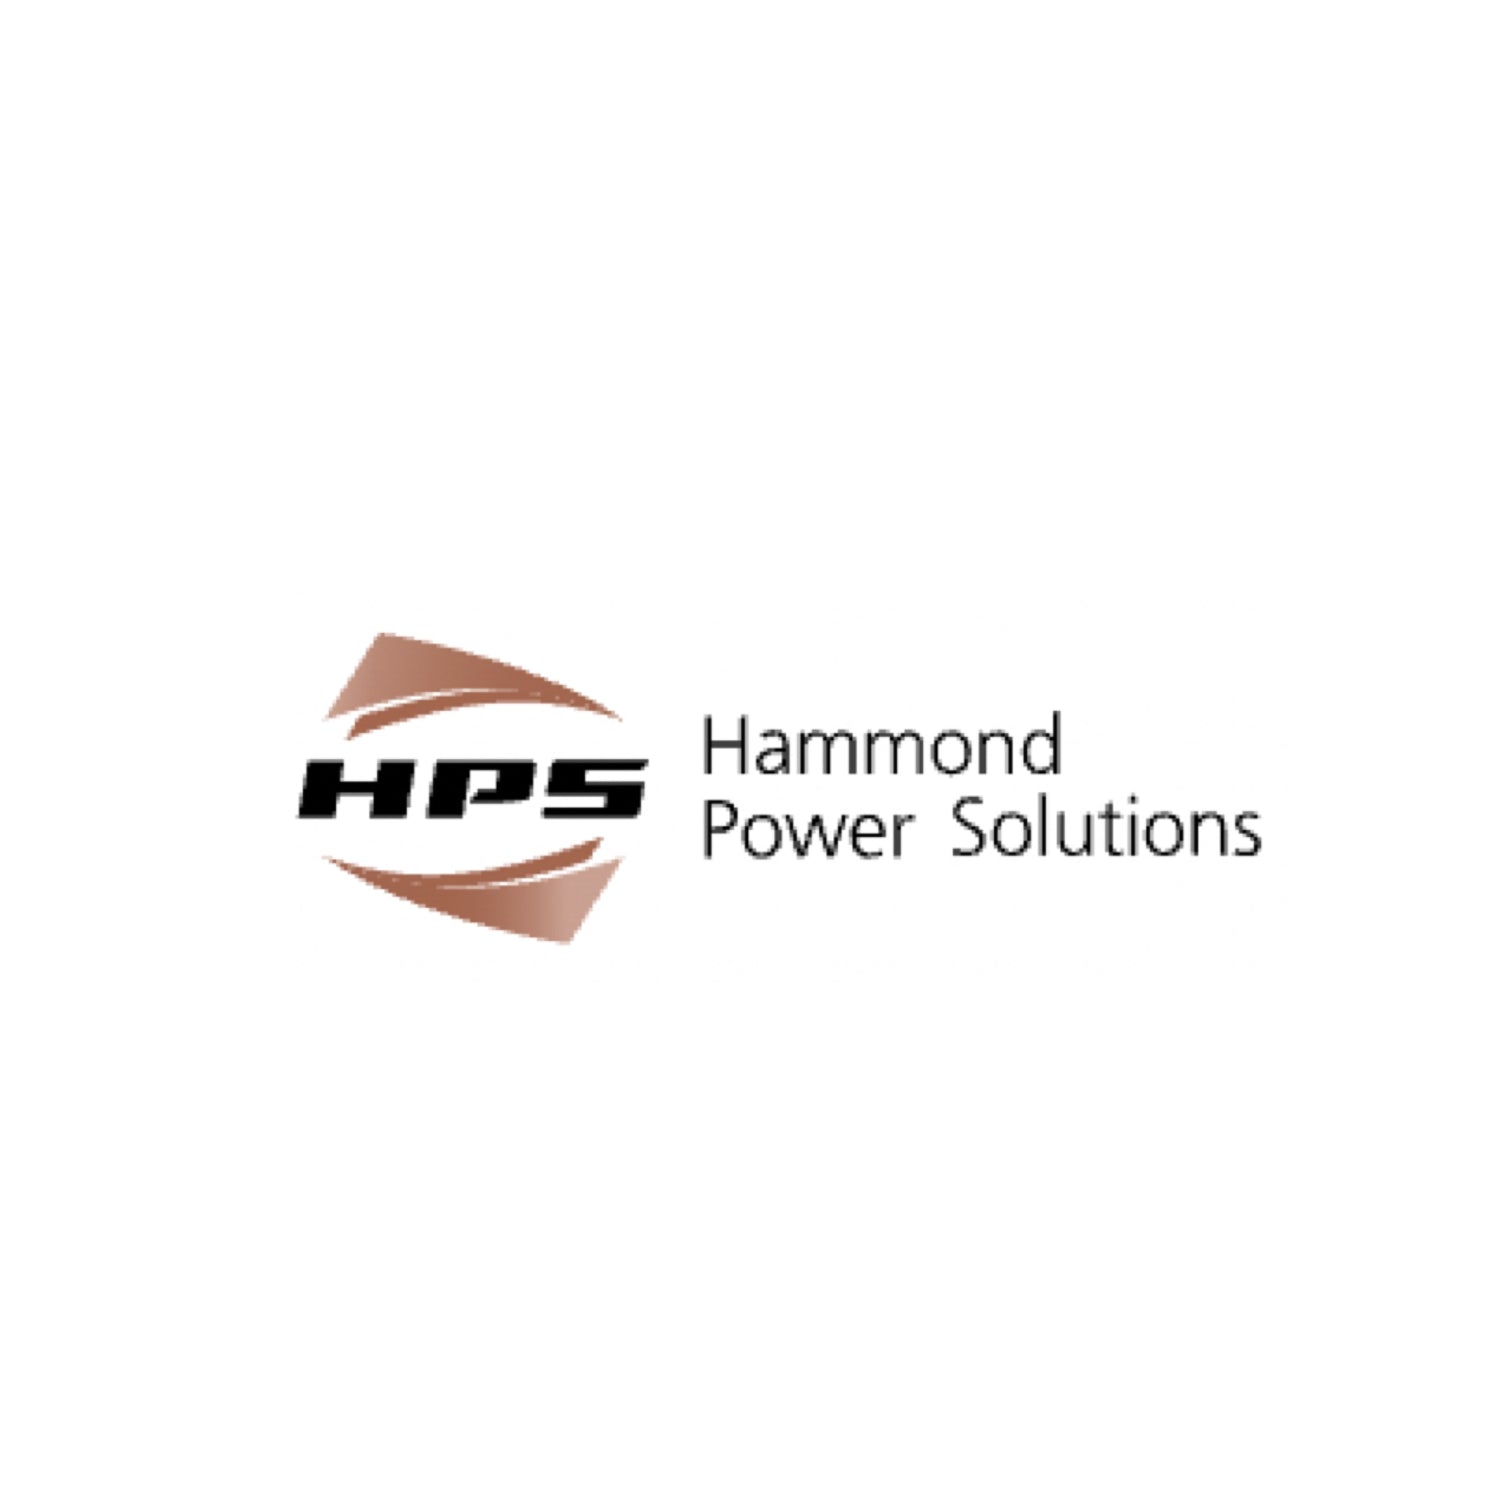 HAMMOND POWER SOLUTIONS INC.